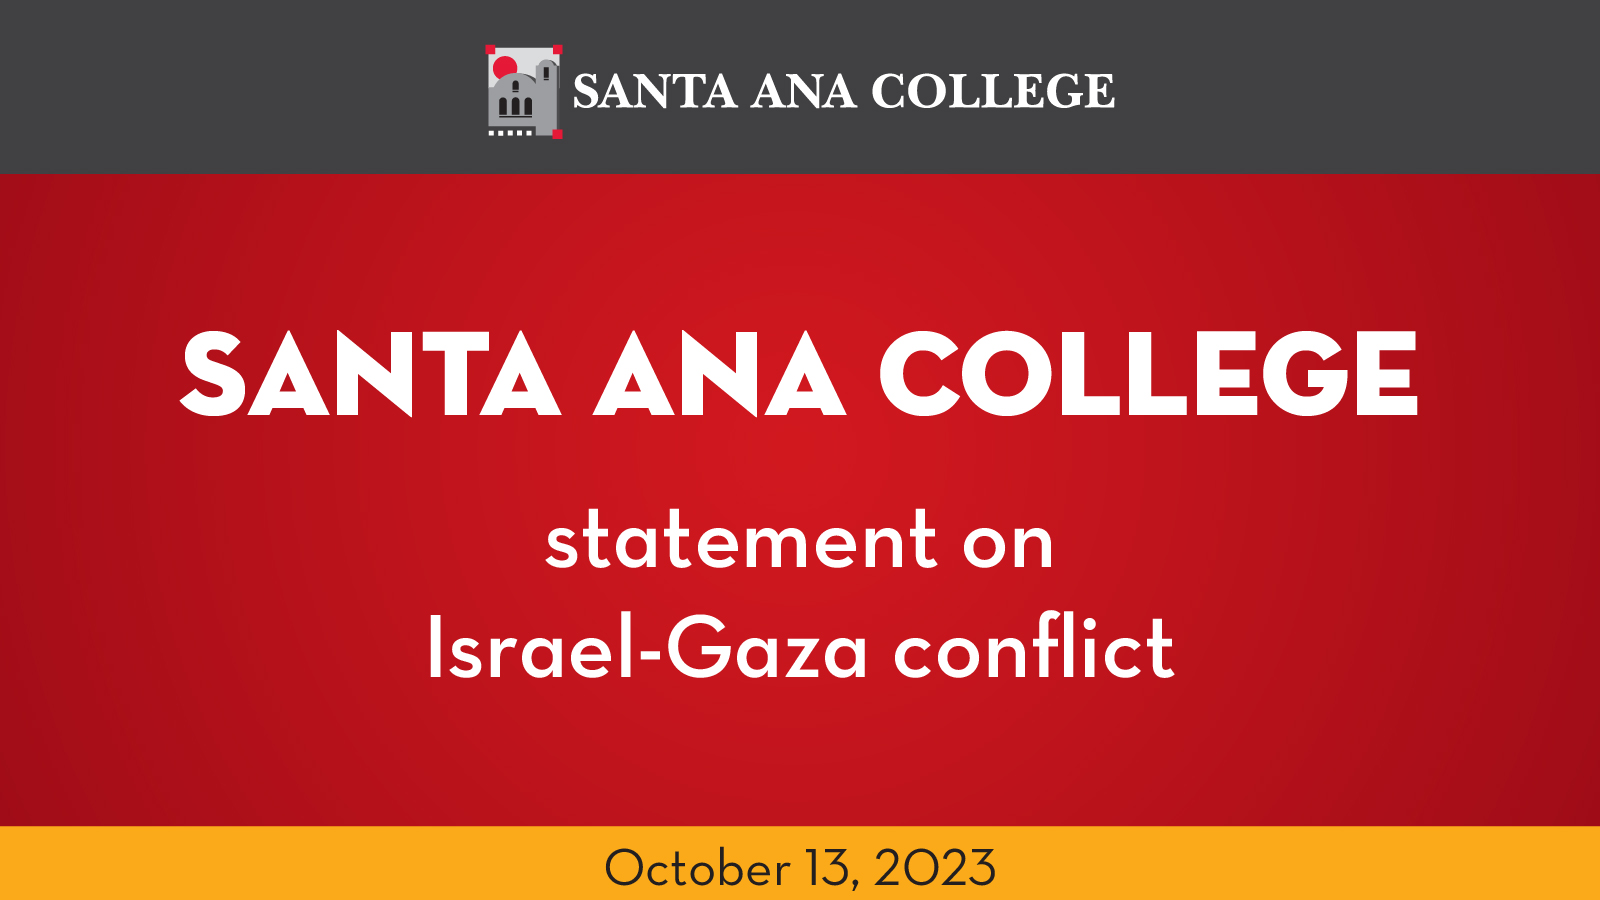 Santa Ana College statement on Israel-Gaza conflict